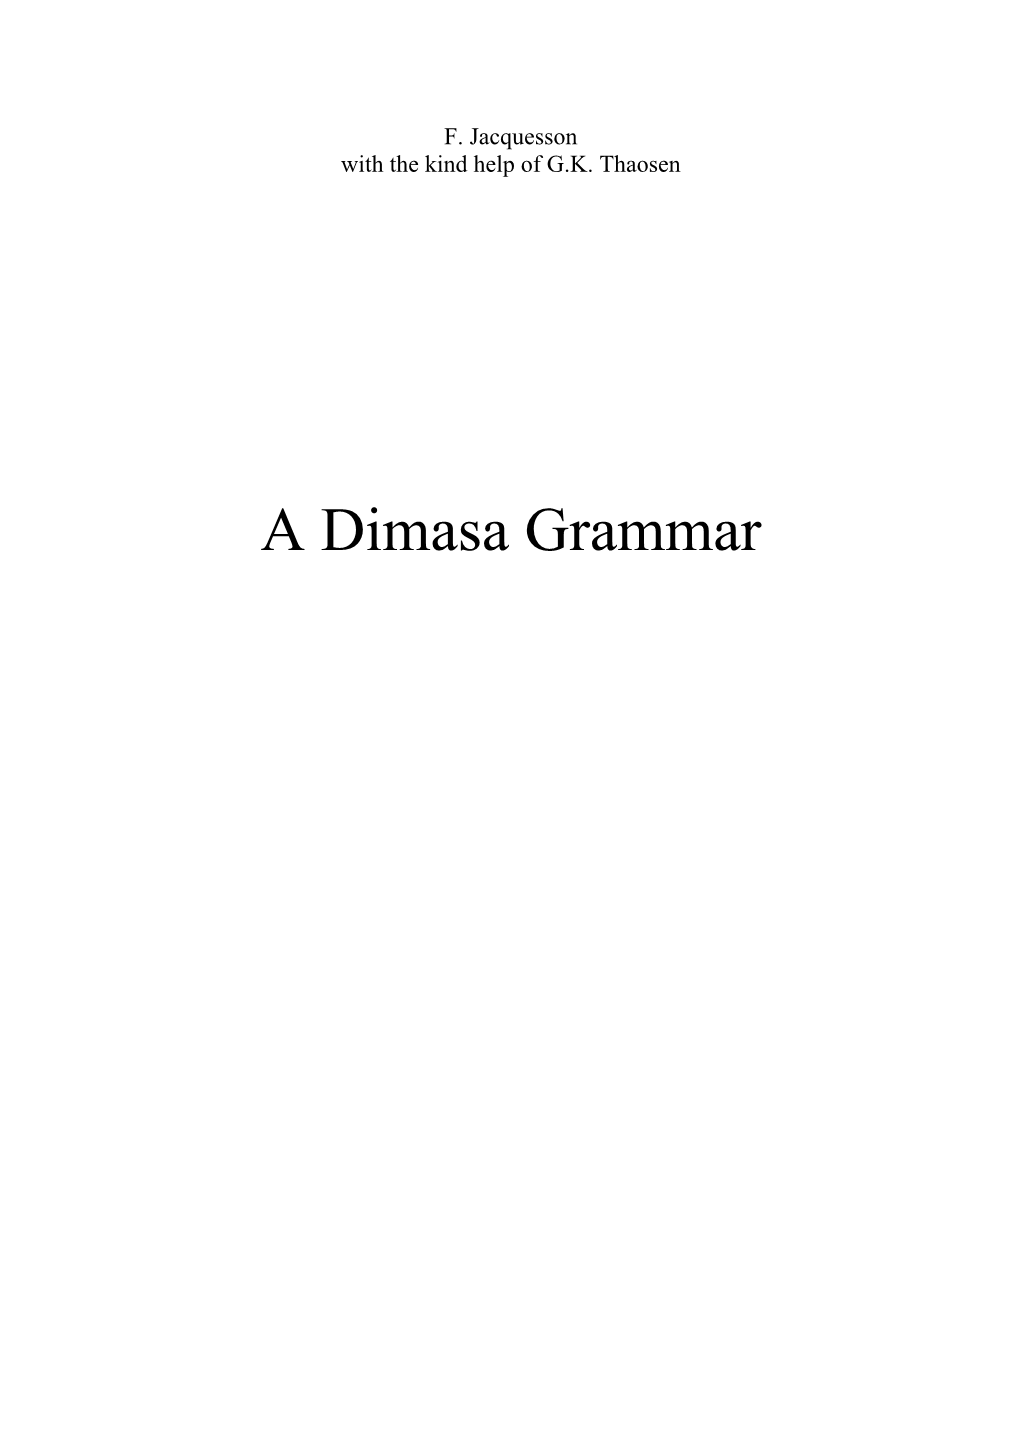 A Dimasa Grammar